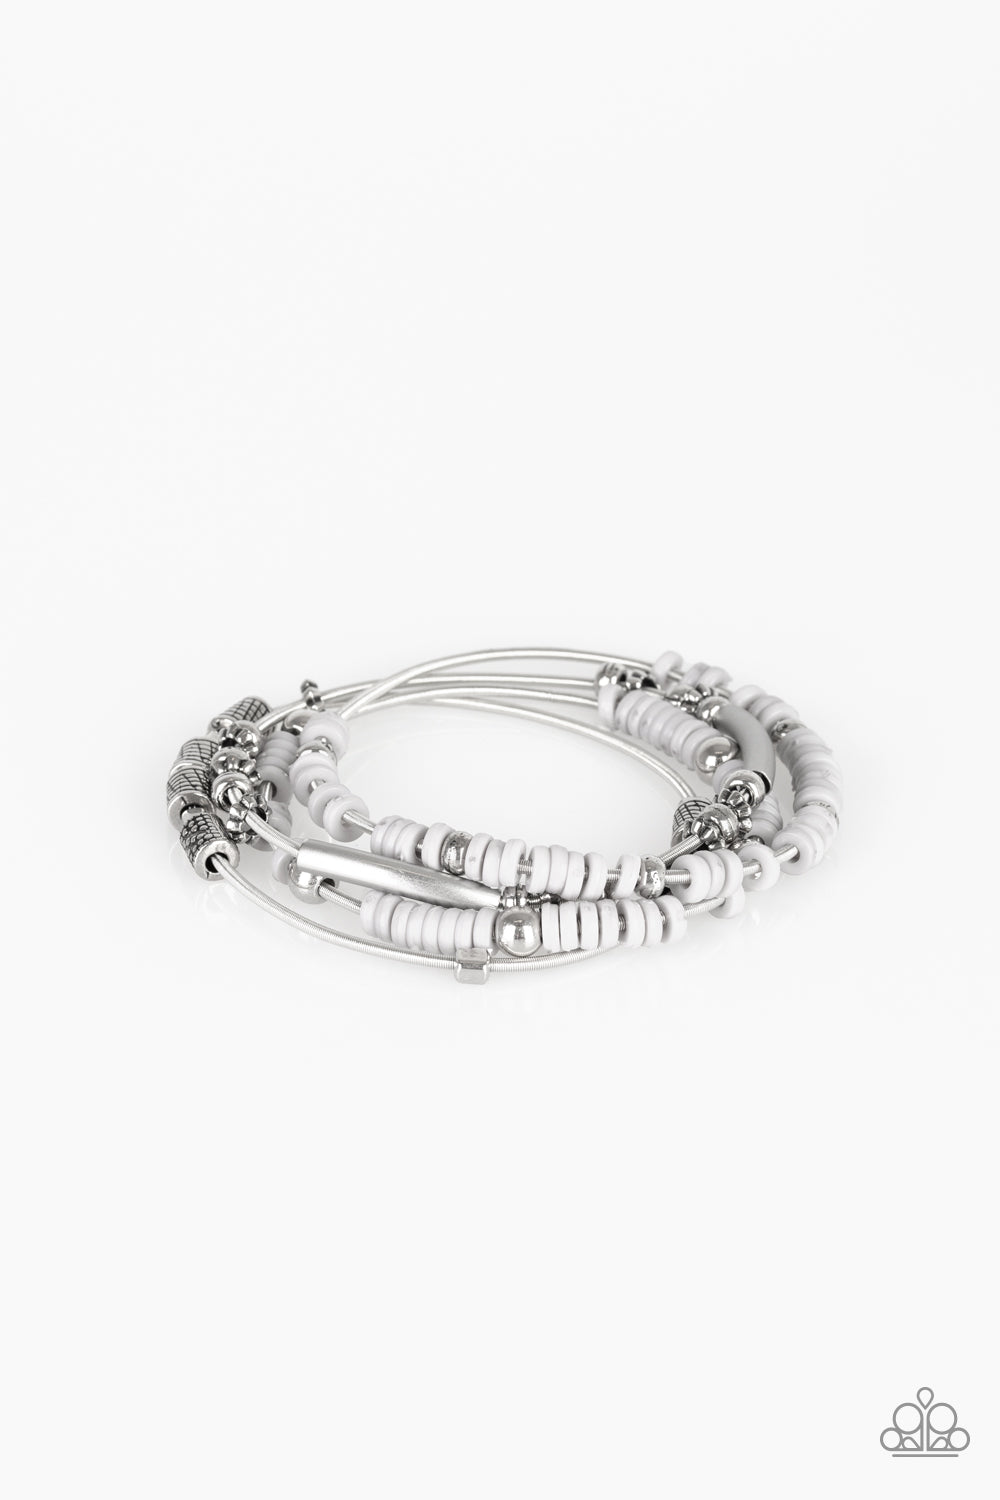 Tribal Spunk - Silver Bracelet Set - Princess Glam Shop